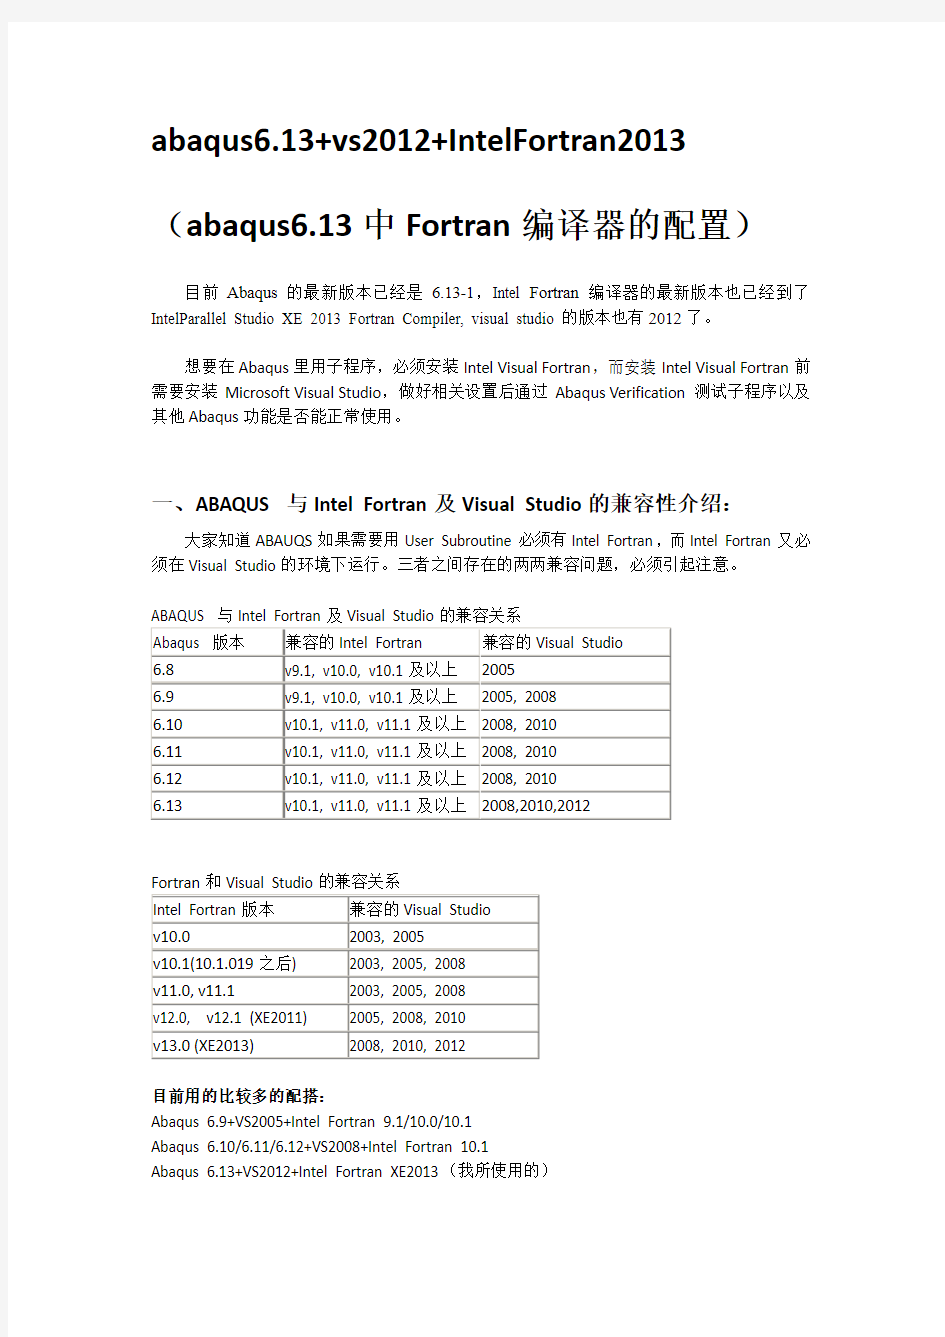 abaqus6.13+vs2012+Intel Fortran 2013 (abaqus6.13中Fortran编译器的配置)